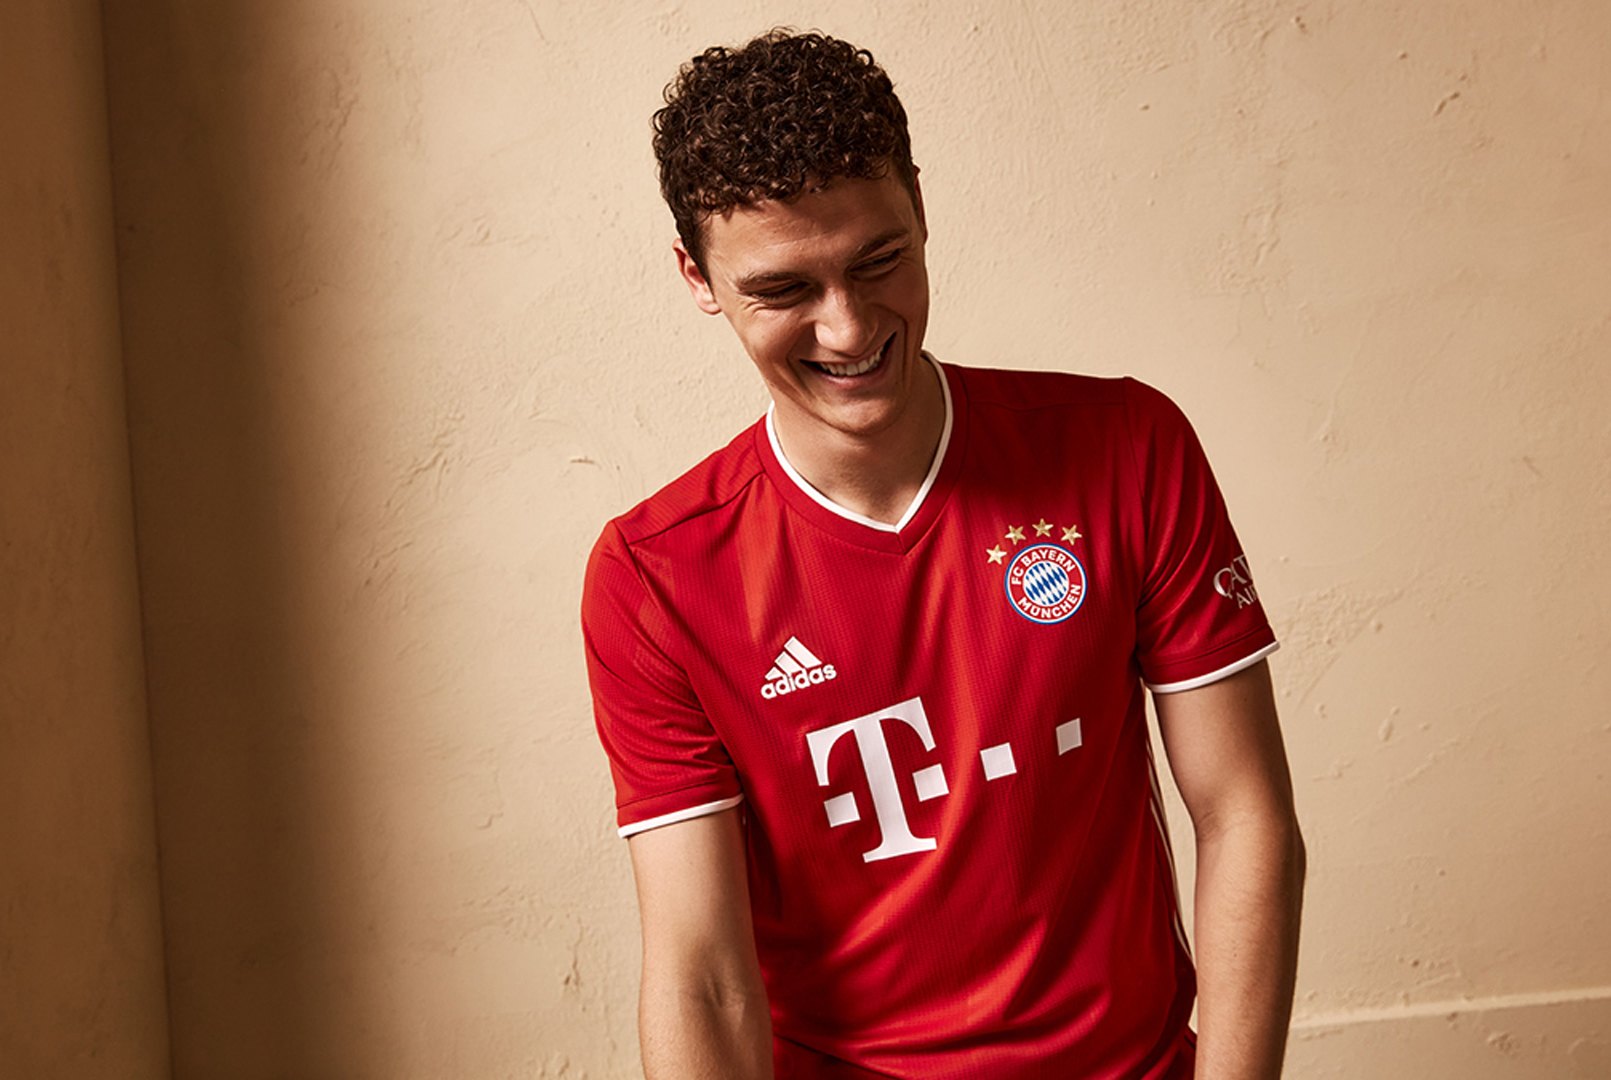 Masaje Cadena Tendero Camiseta adidas del Bayern Munich 2020/21